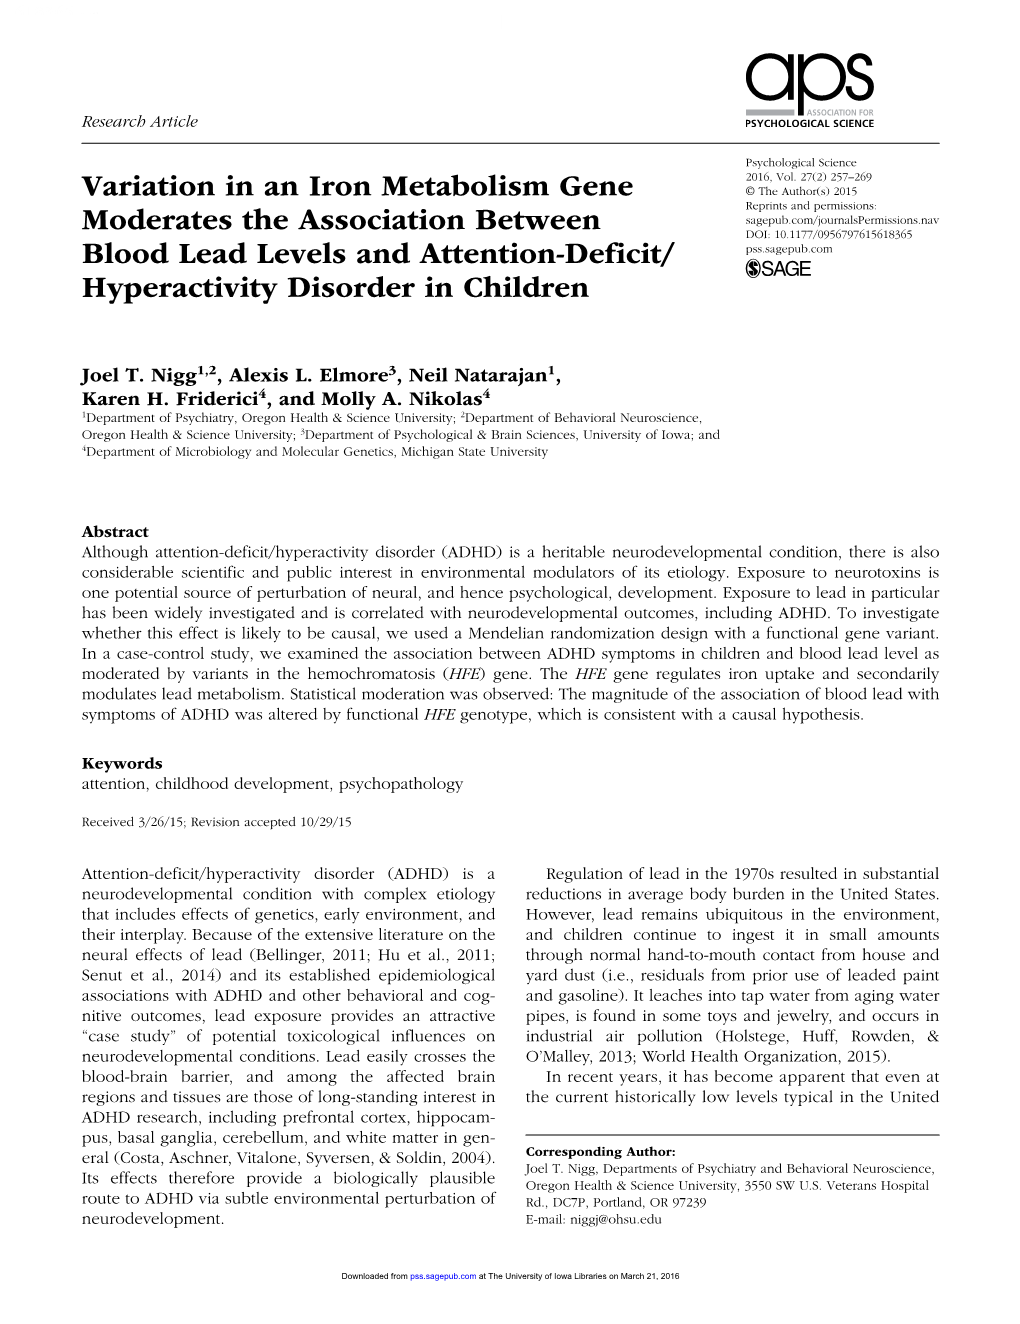 Variation in an Iron Metabolism Gene Moderates the Association Between